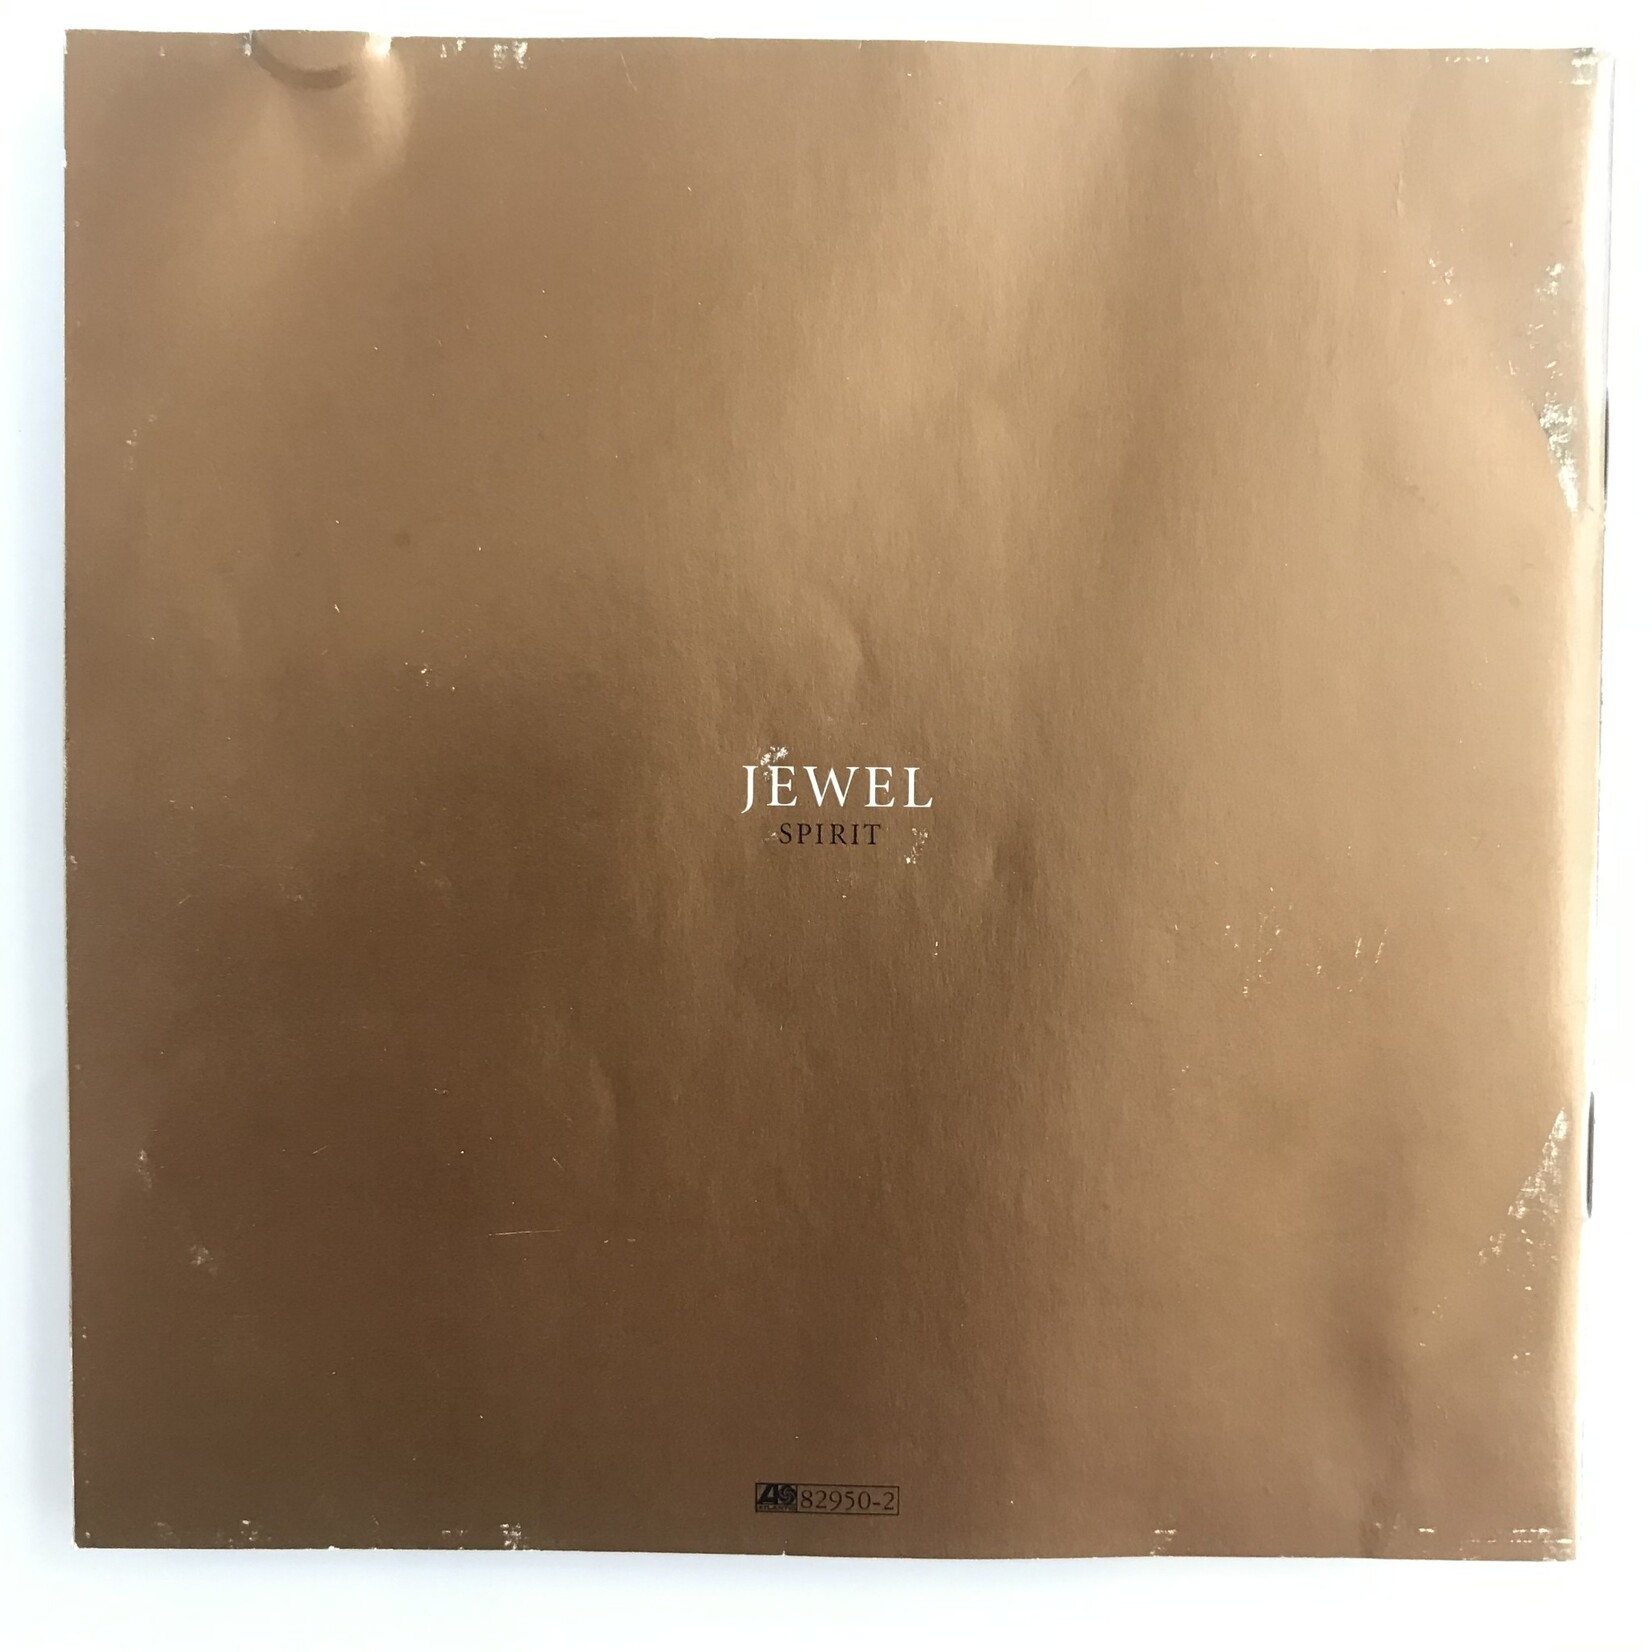 Jewel - Spirit - CD (USED)